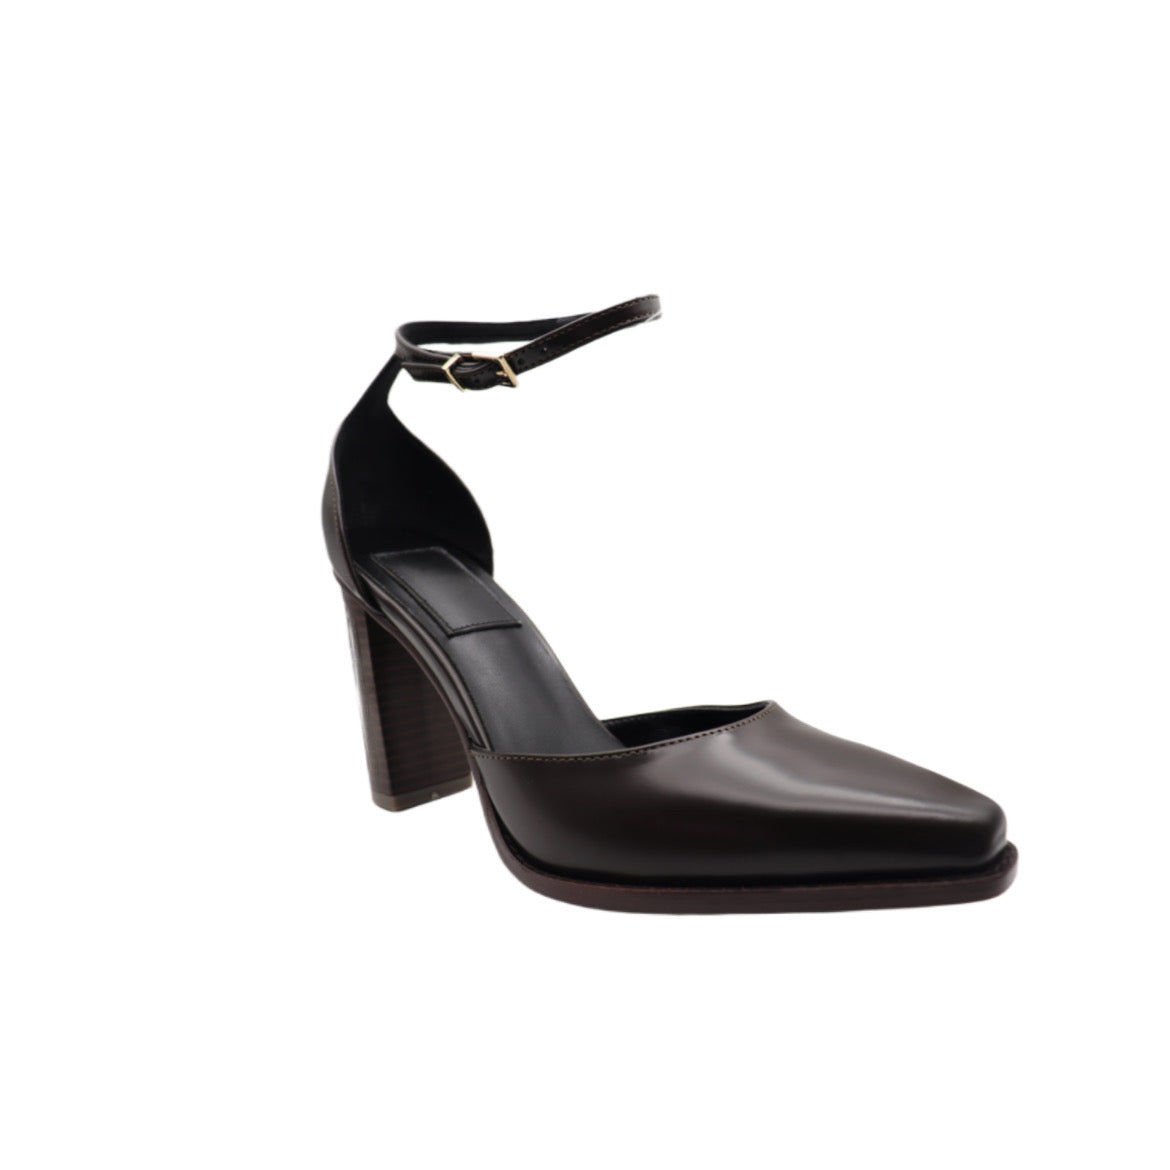 Sleek Sub-Black Cowhide Leather Pointy Toe Heels: A Sophisticated Choice